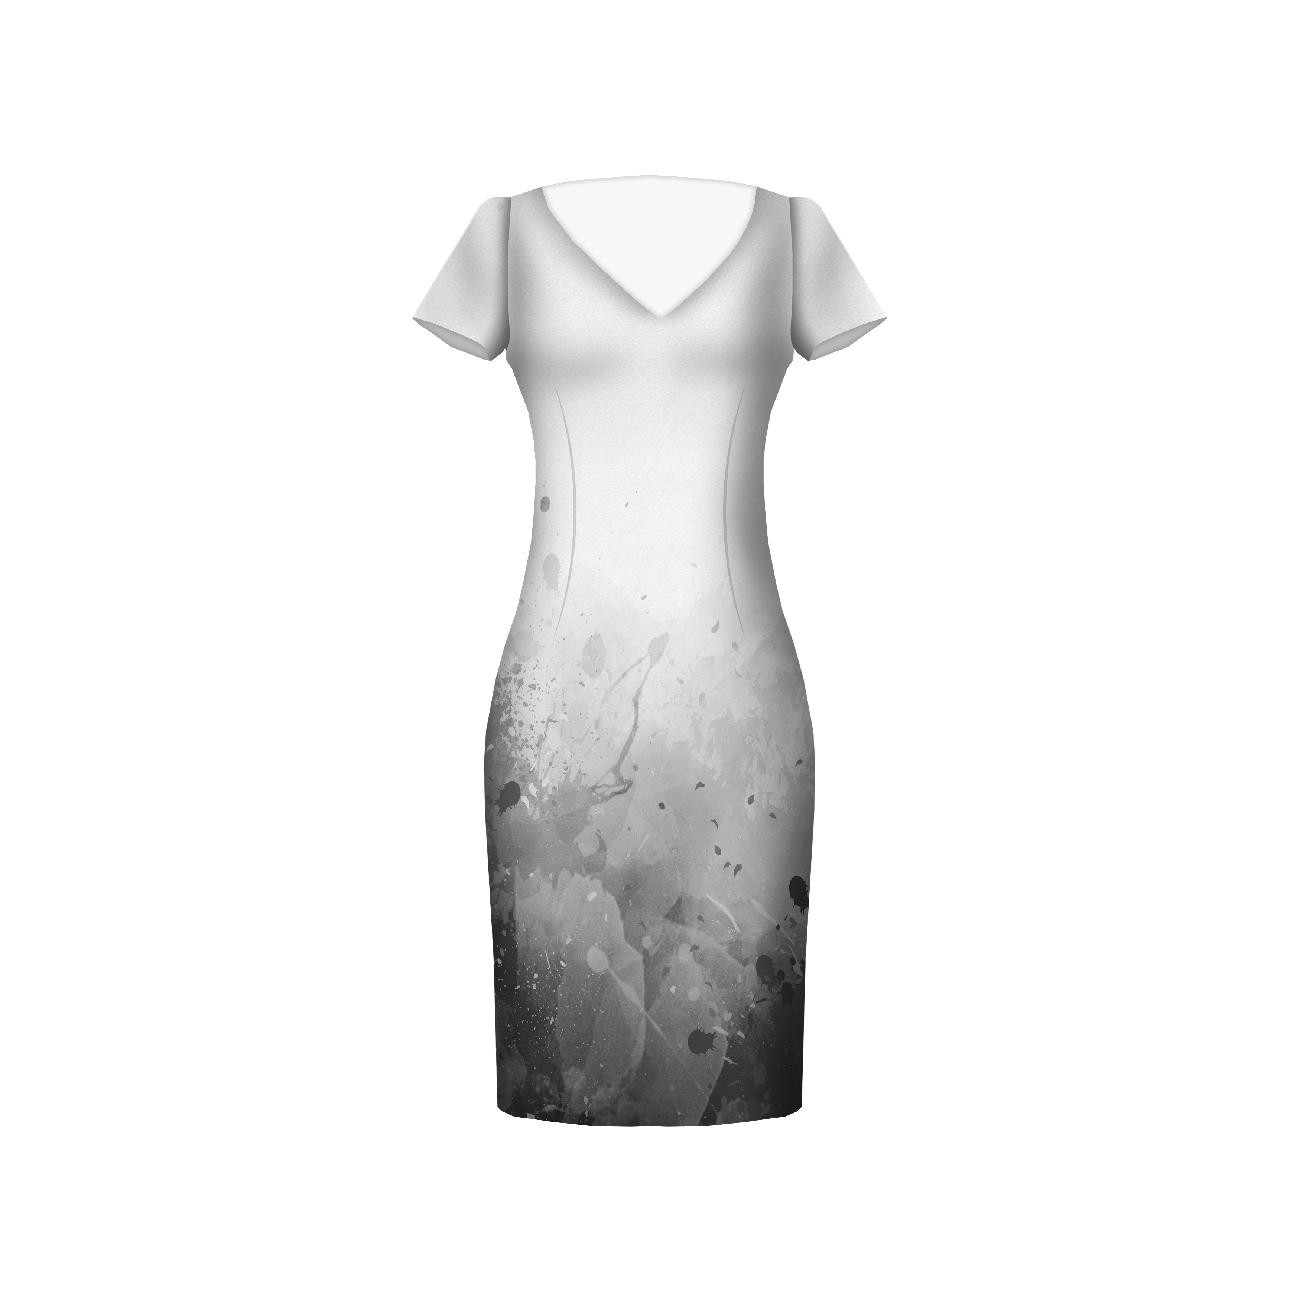 KLECKSE (grau) - Kleid-Panel Baumwoll Musselin